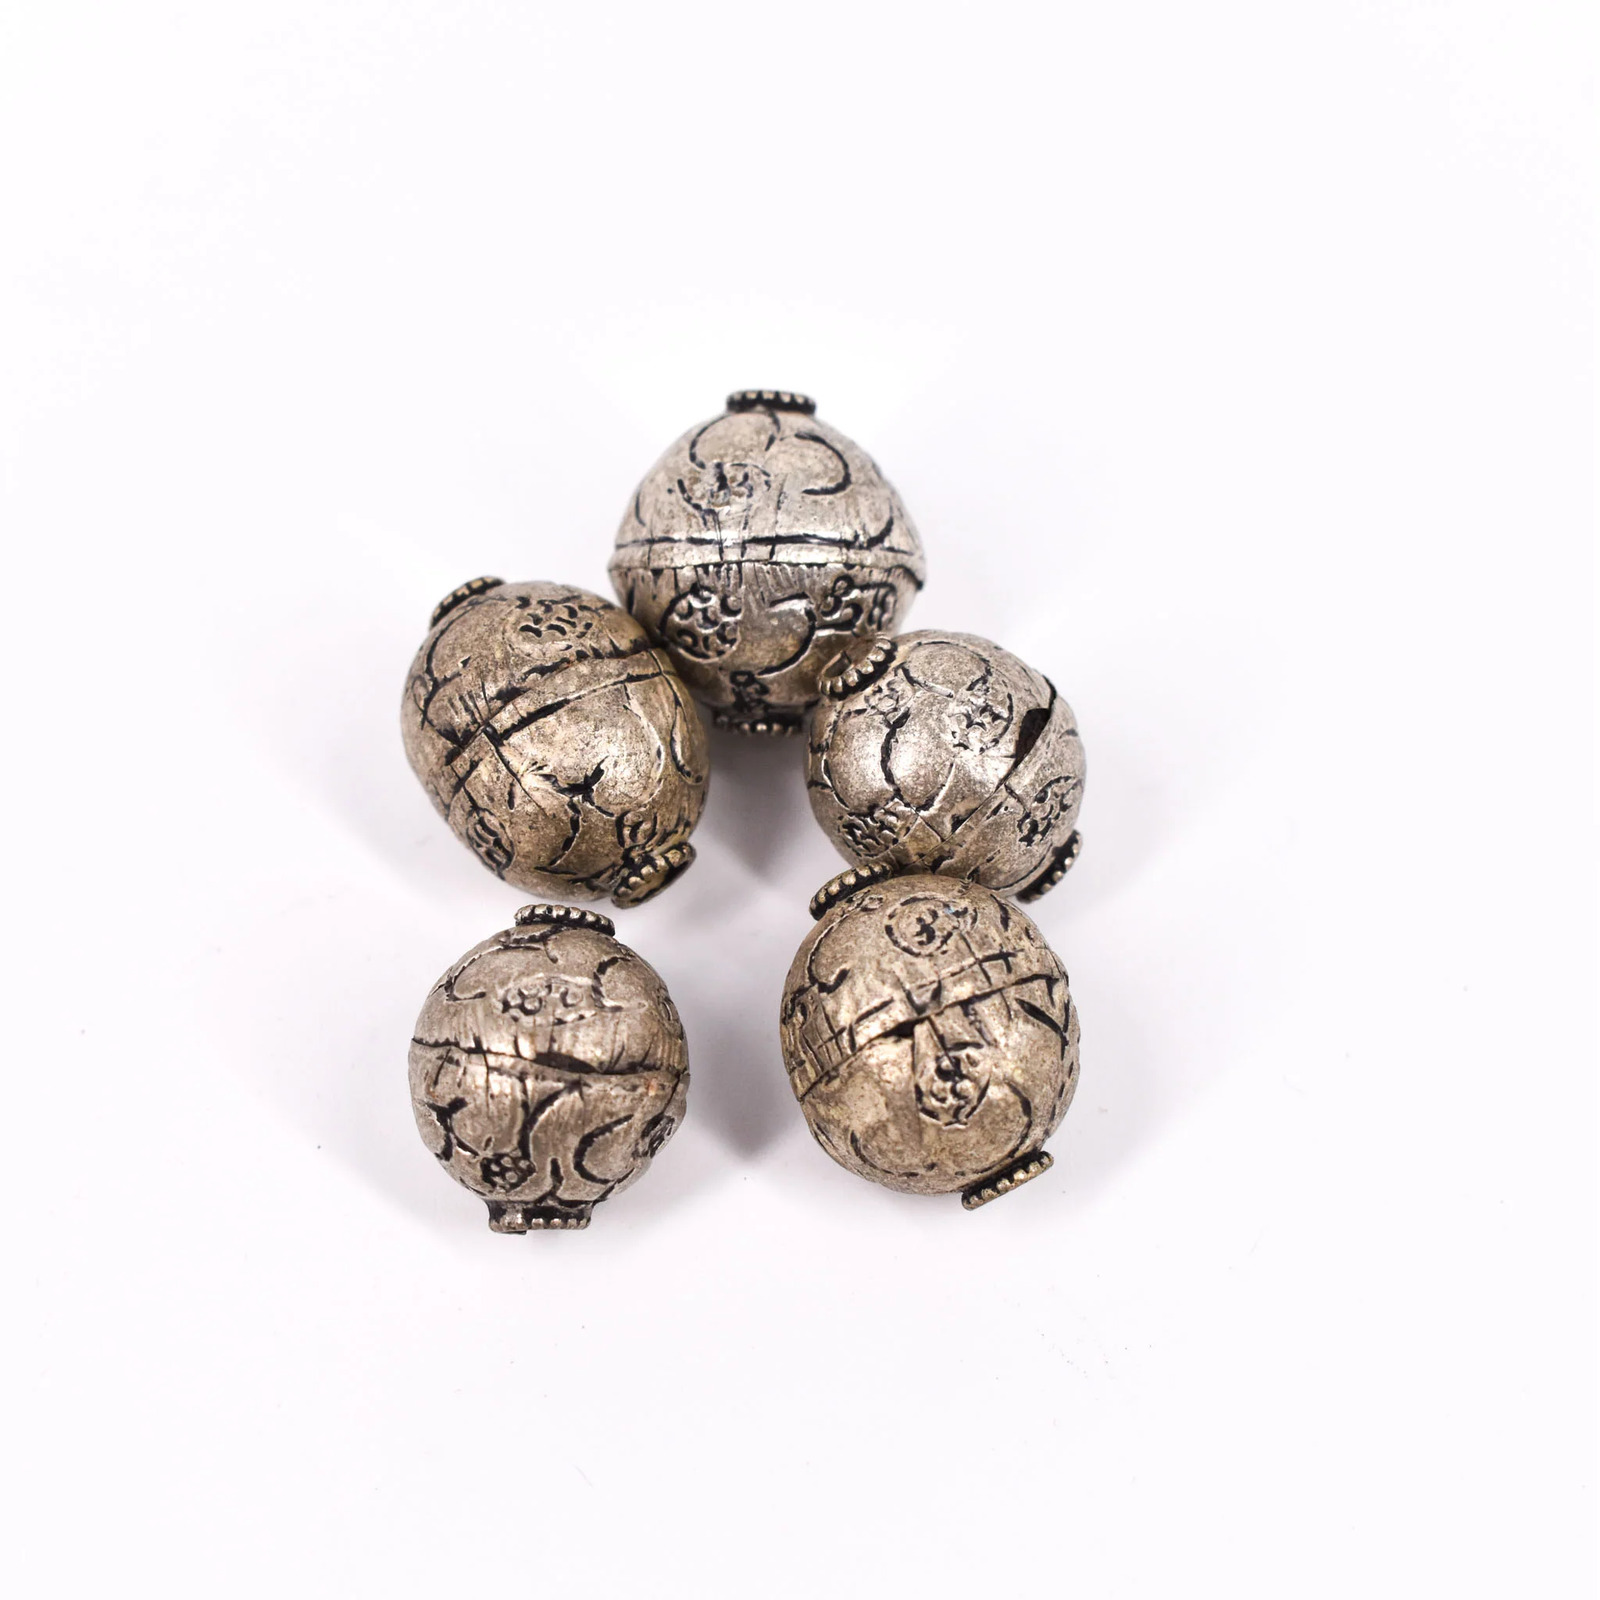 5 Tibetan Silver Repoussé Round Beads Loose